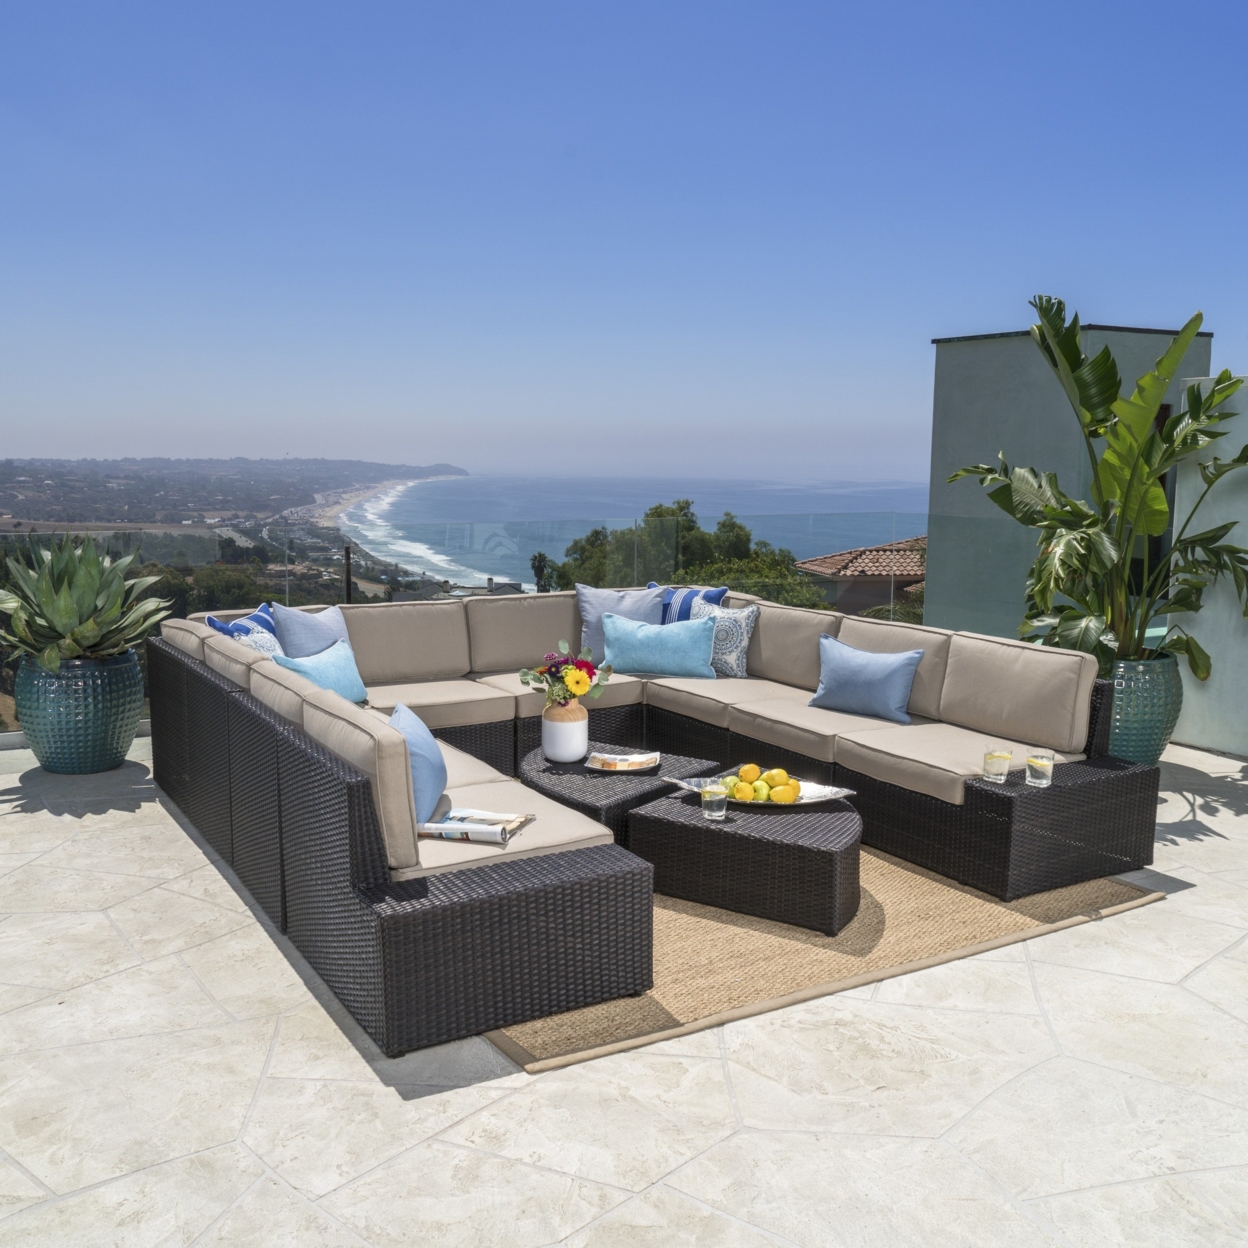 Reddington 12pc Outdoor Wicker Sectional Sofa Set With Cushions - Gray